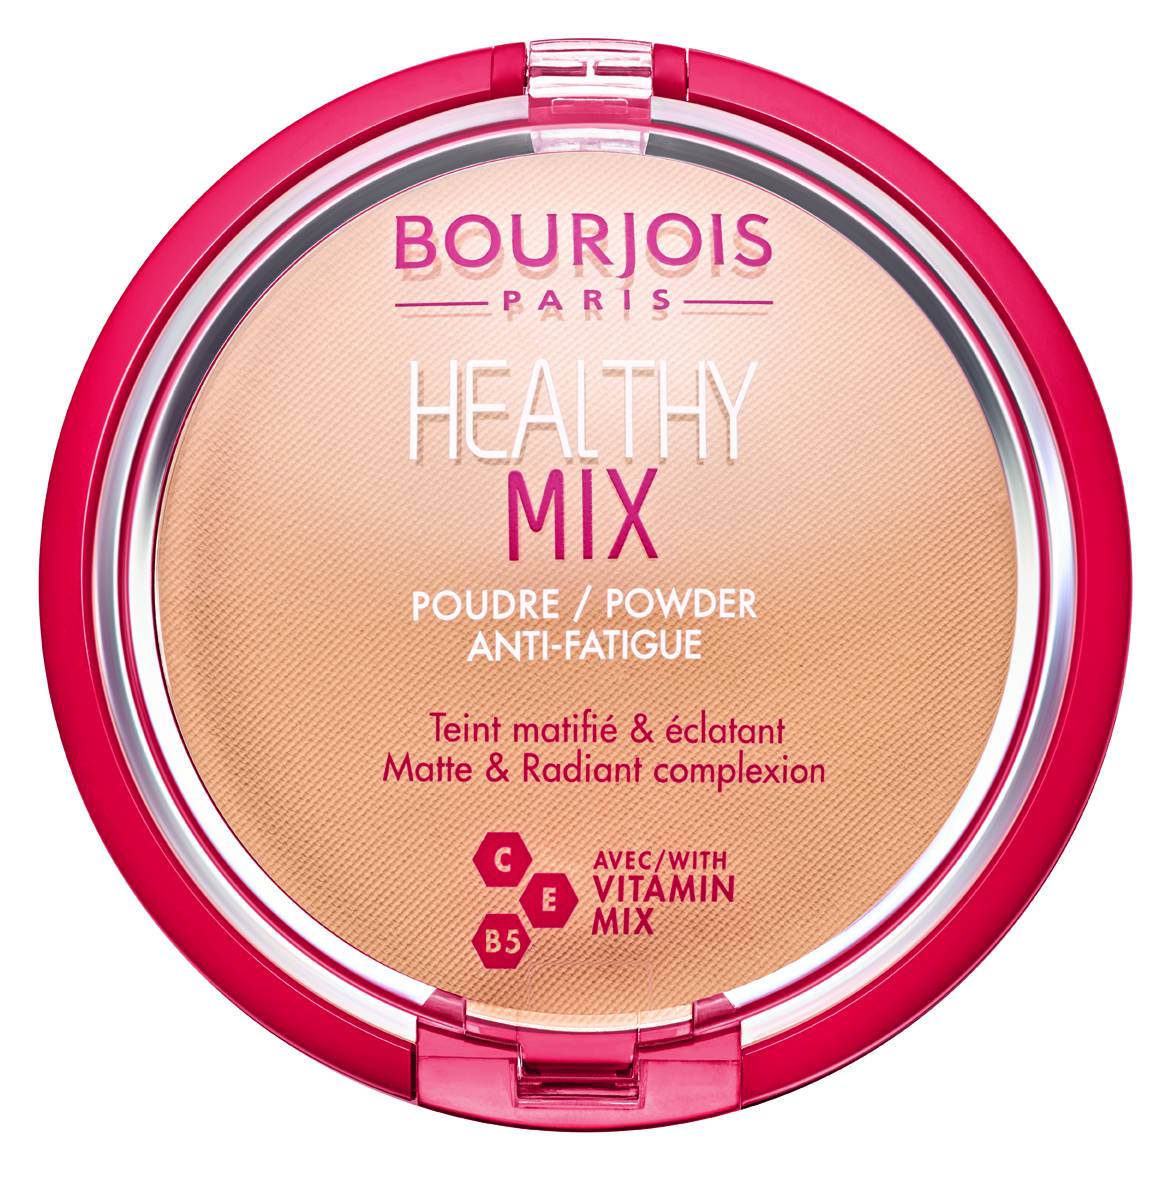 Bourjois predstavlja novu zdravu rutinu: Healthy mix